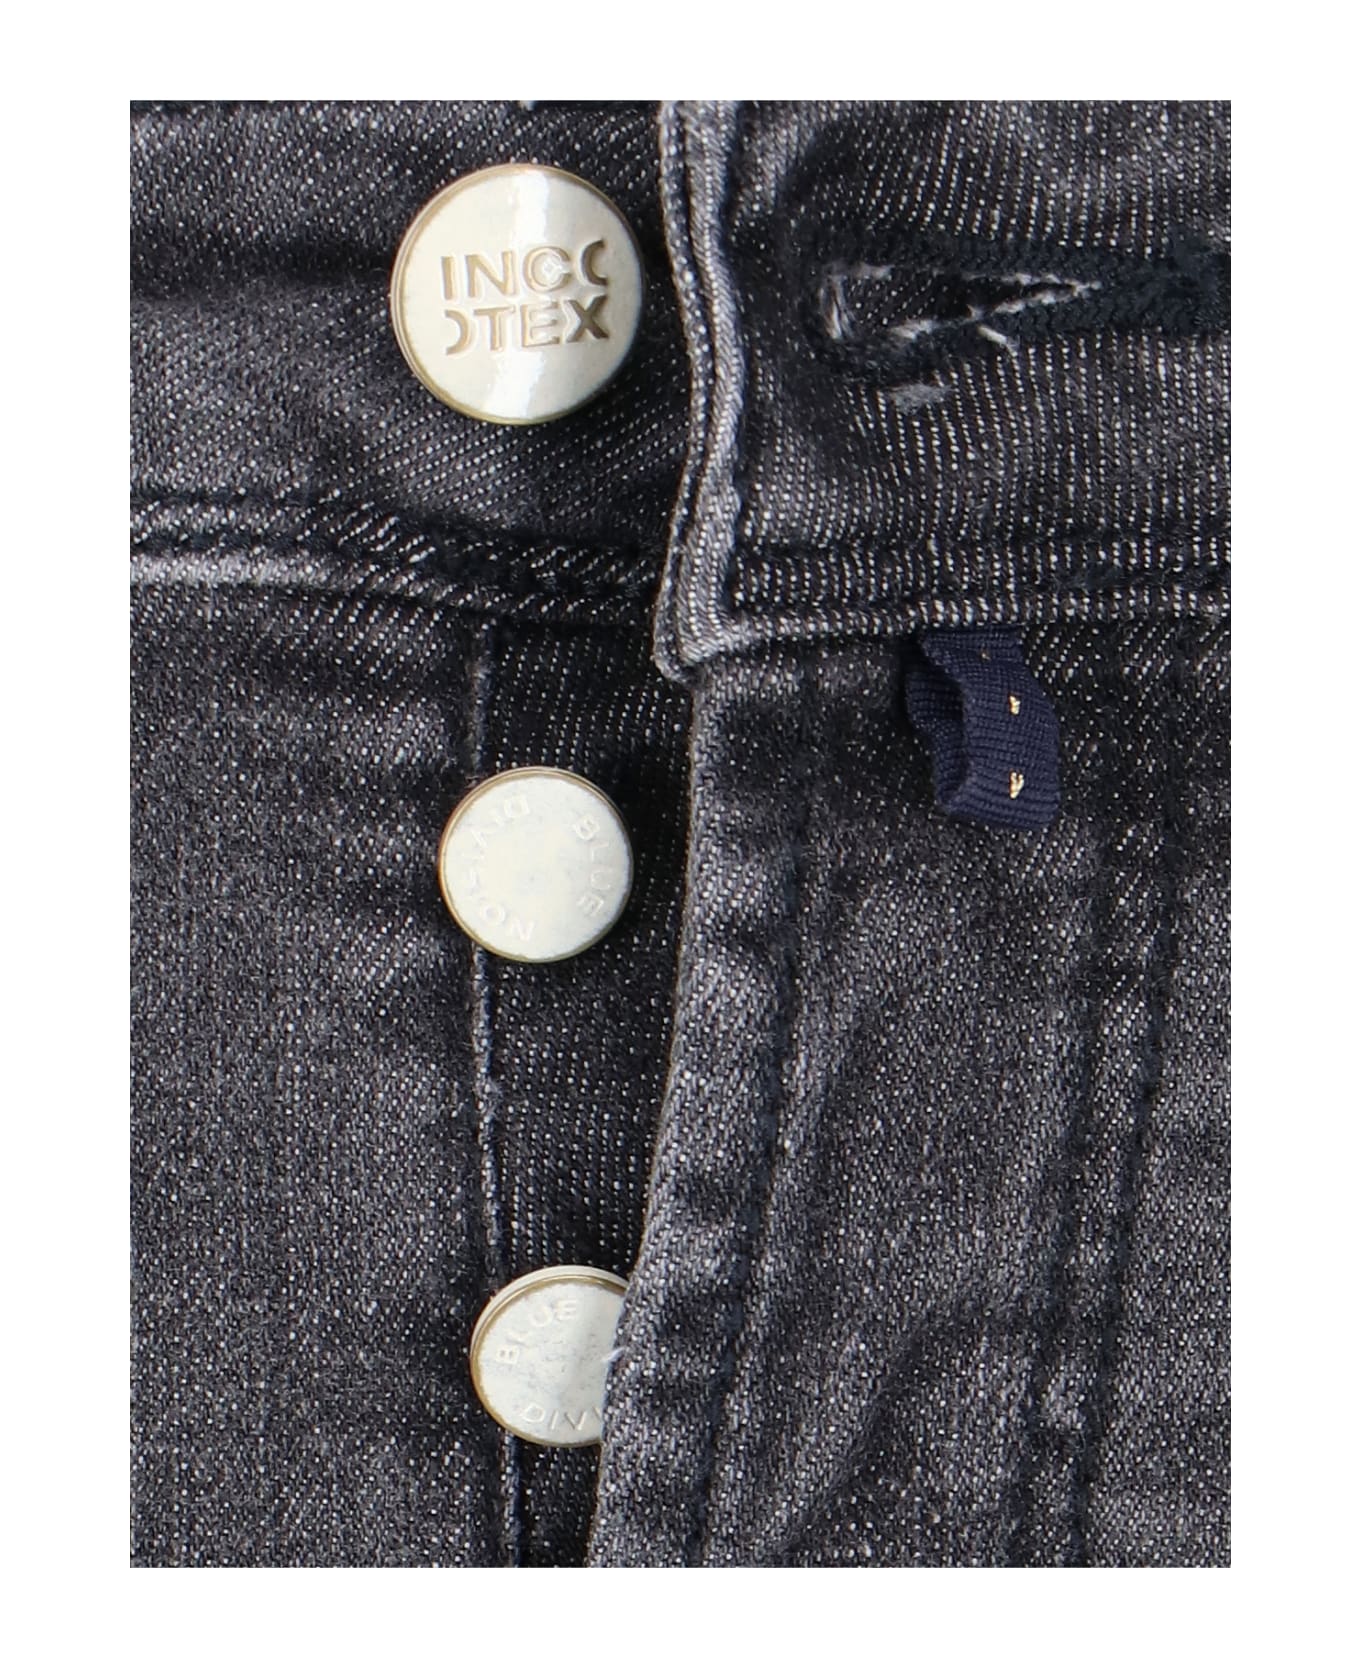 Incotex Blue Division Jeans - Gray デニム